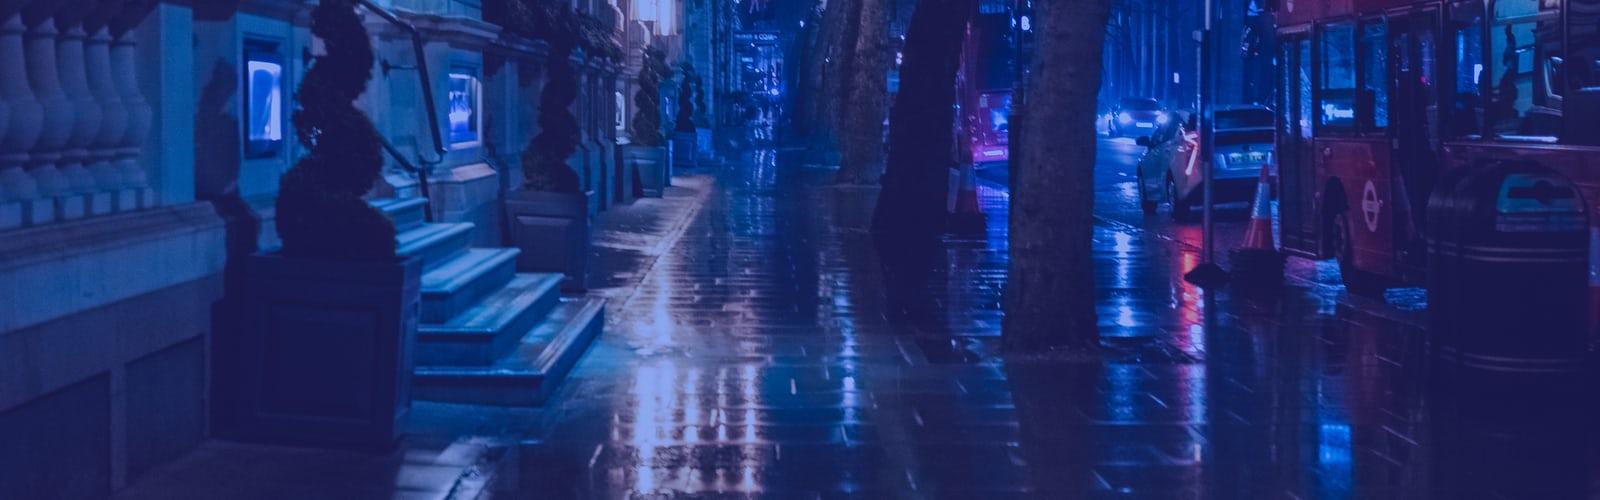 A city street with neon lights and rain - Dark vaporwave